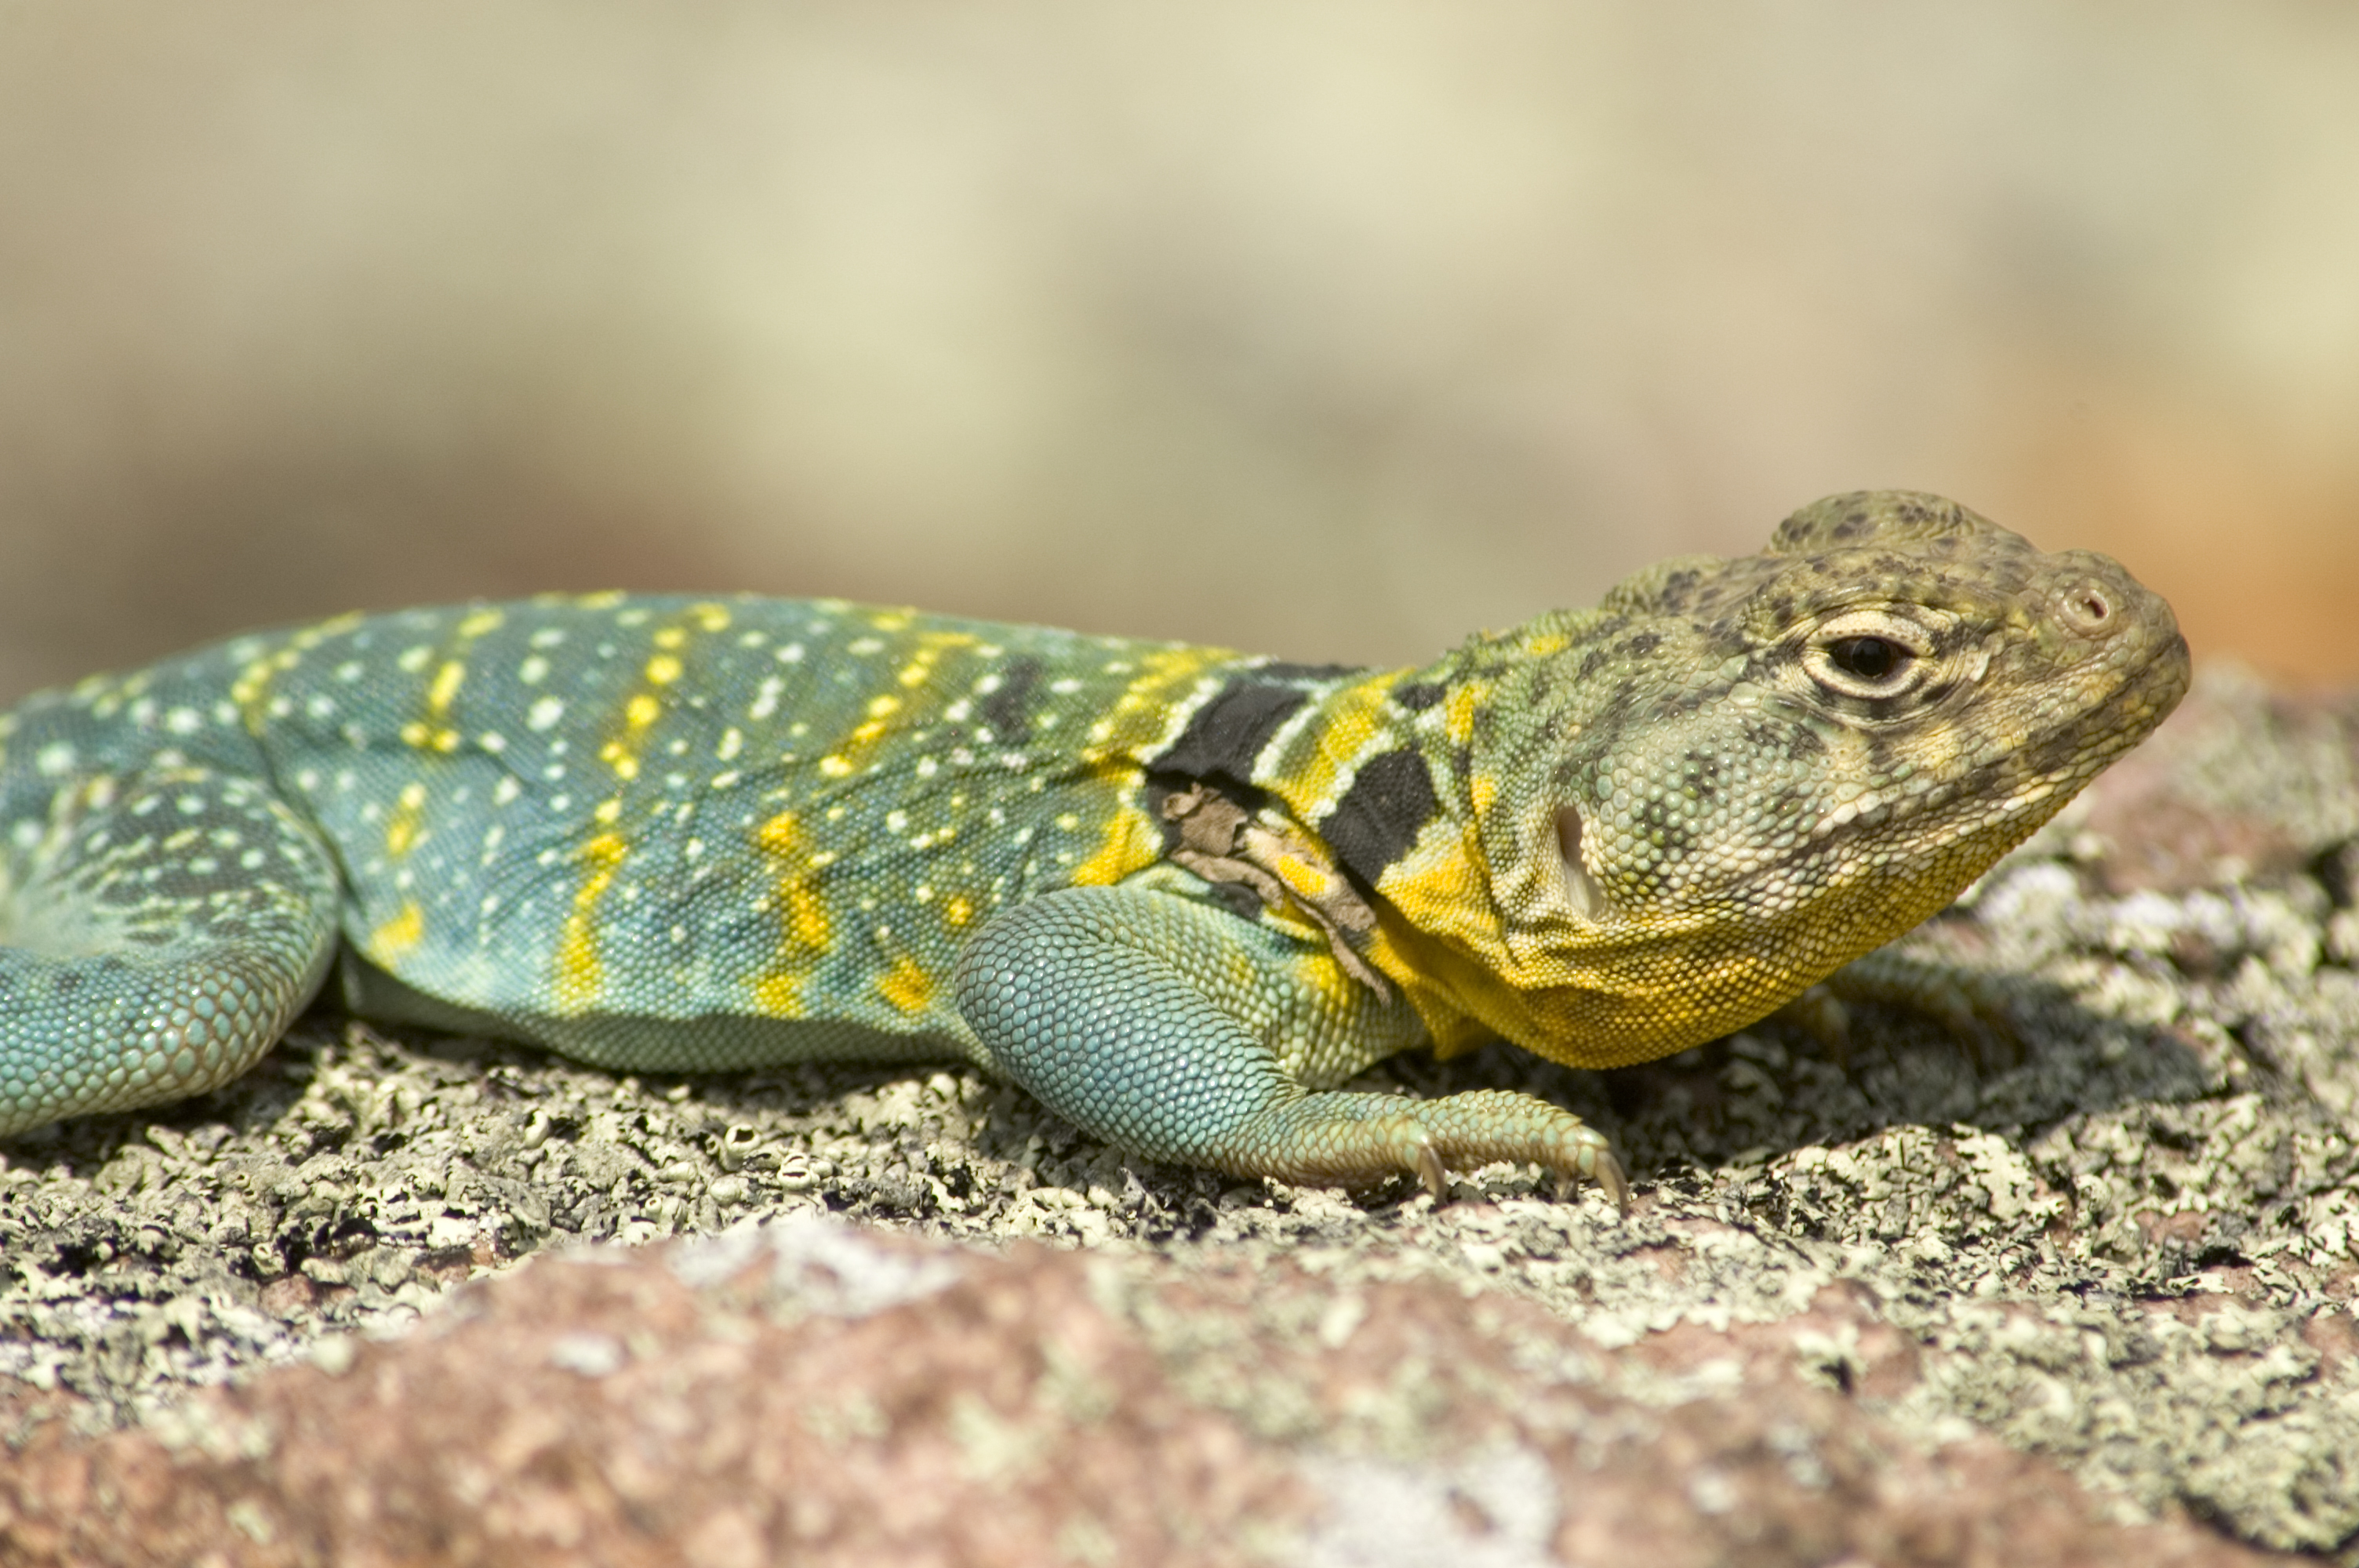 Wild lizard photo